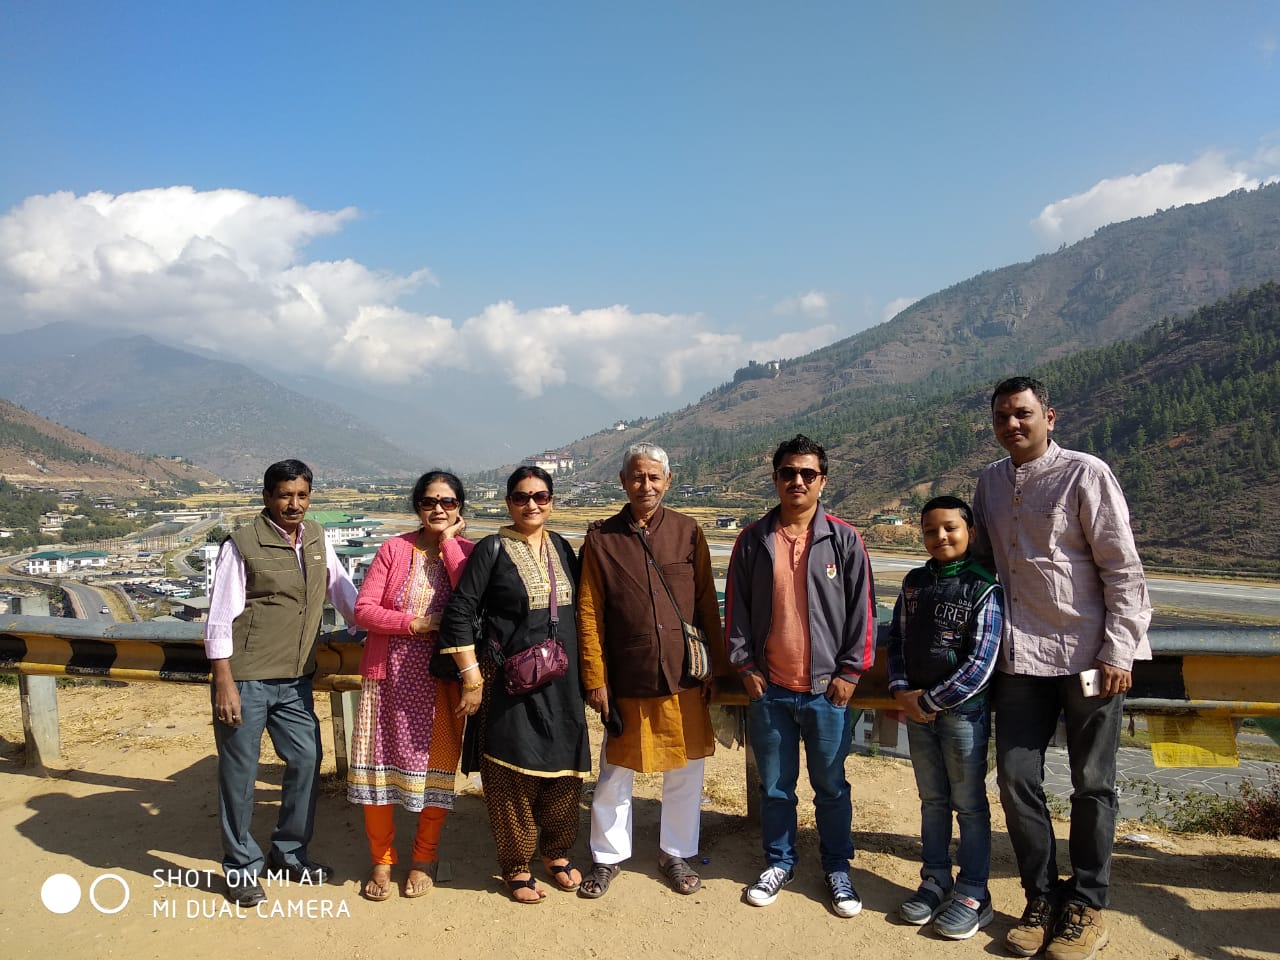 What made my Bhutan trip a tragedy [unforgettable]